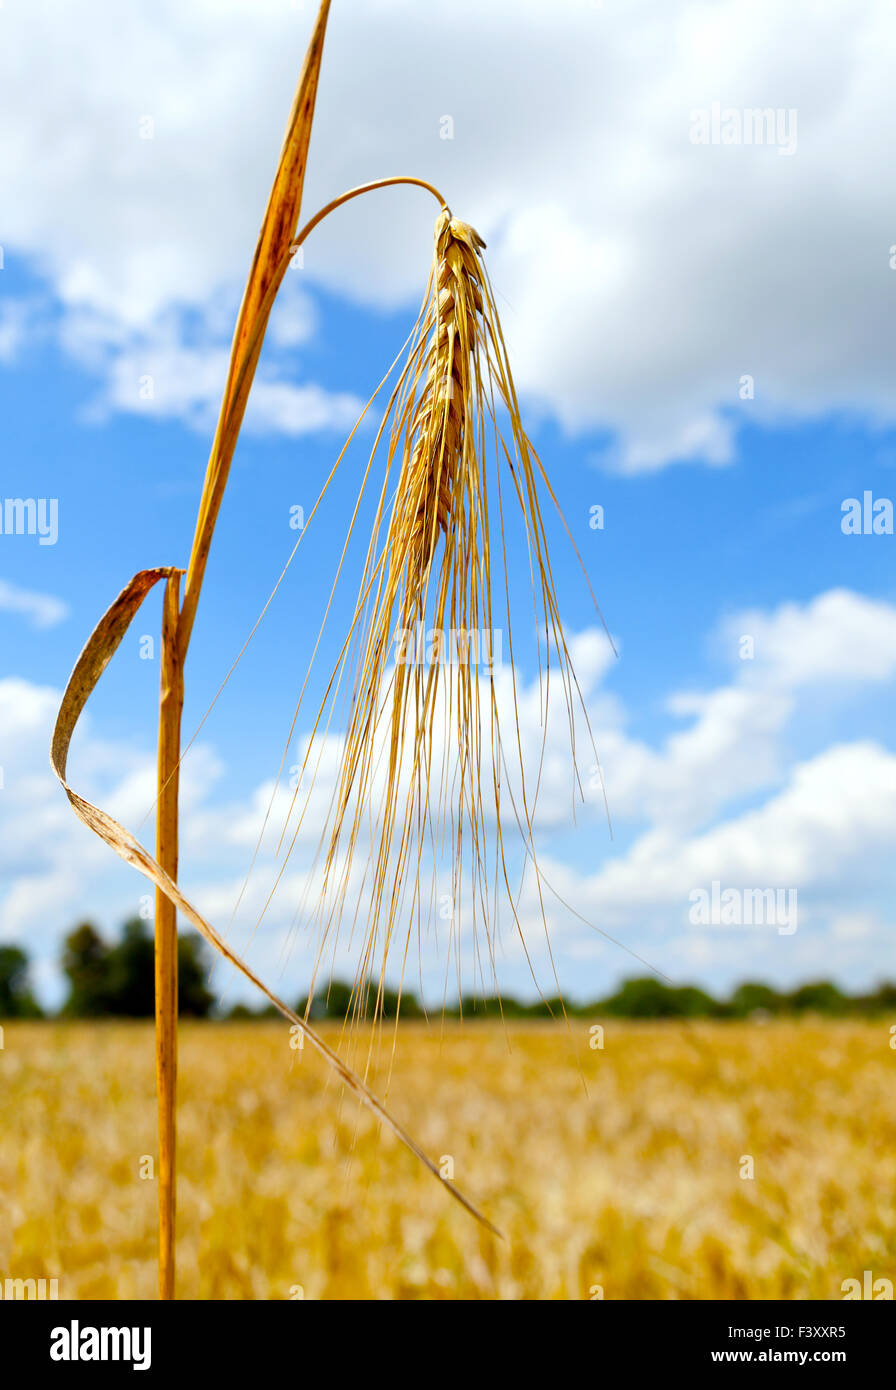 Mature wheat ear against the sky Stock Photo